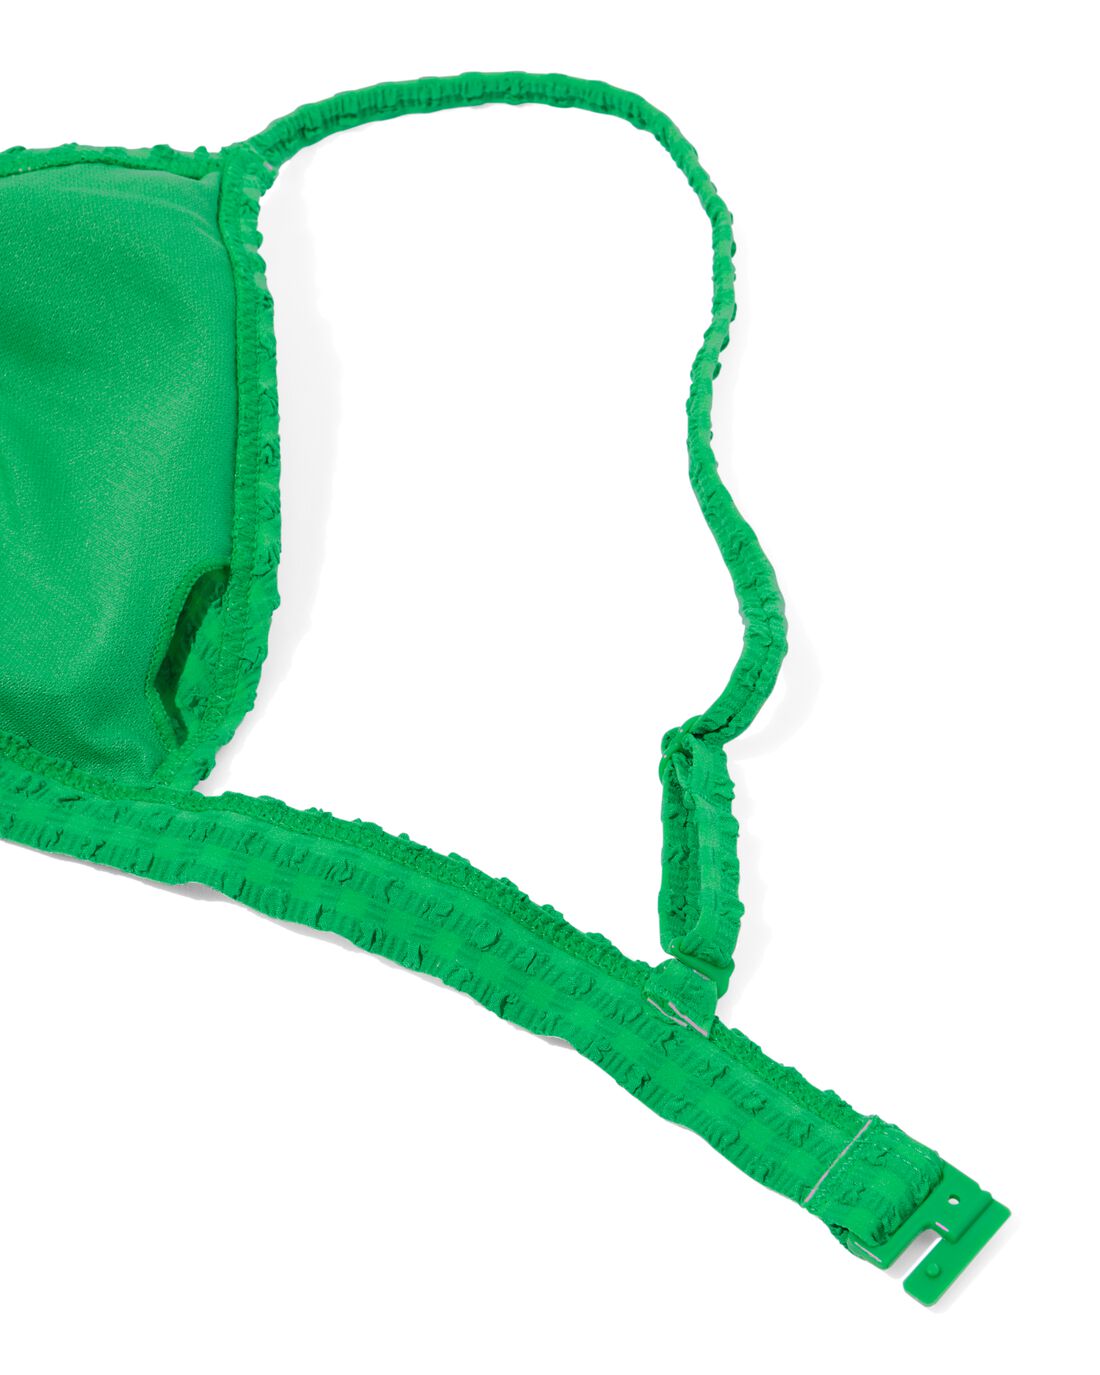 HEMA Dames Triangel Bikinitop Groen (groen)